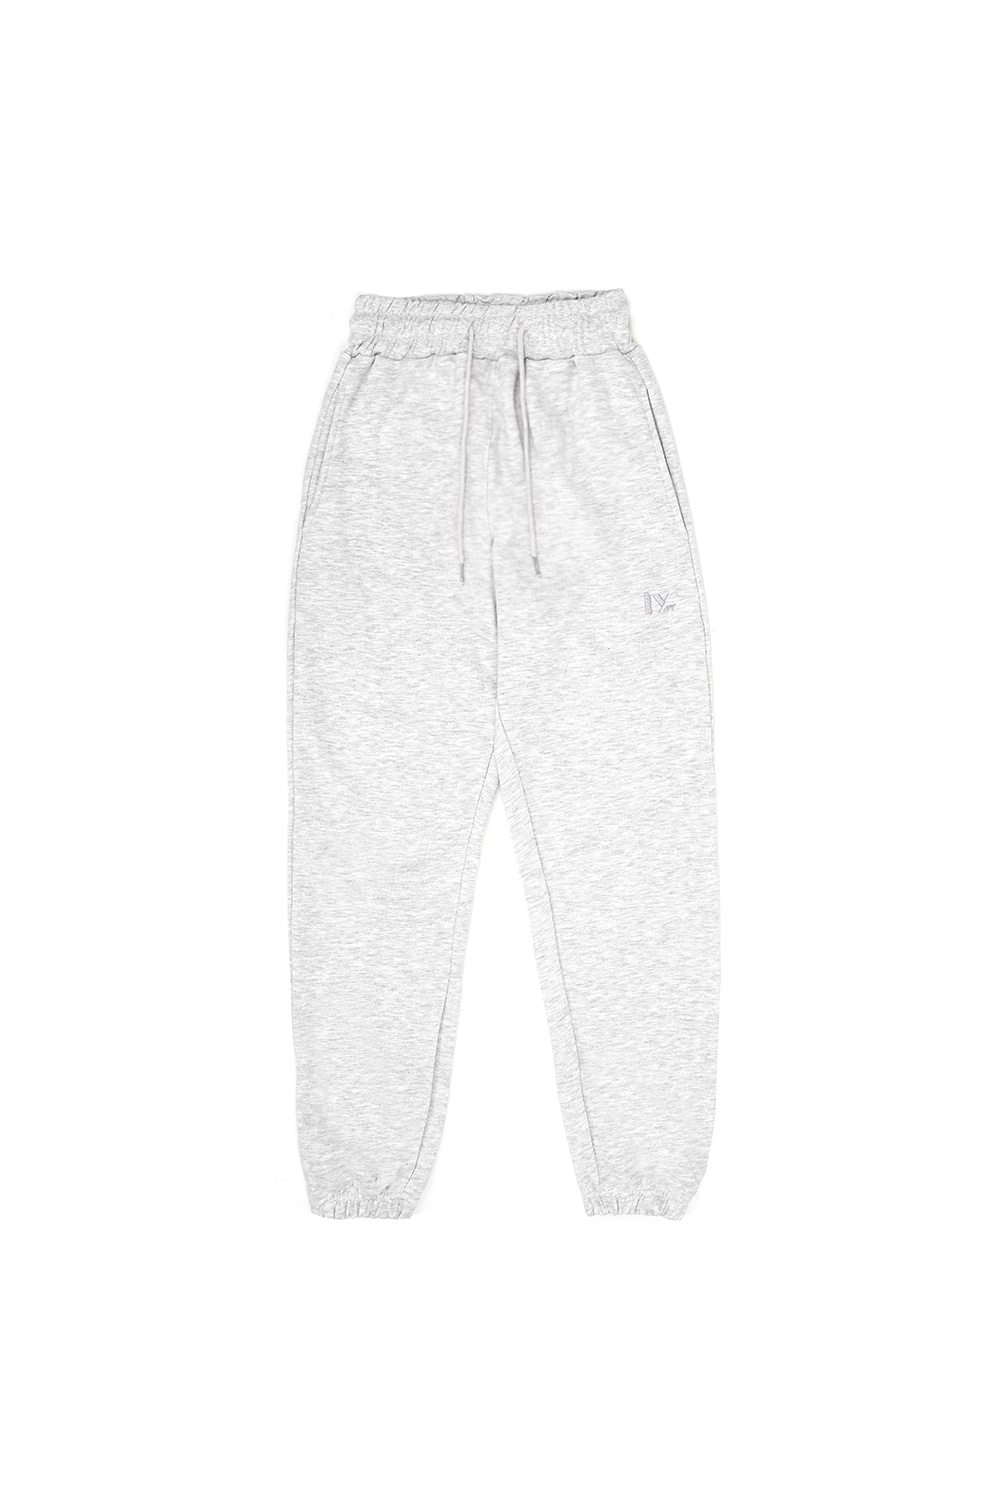 30%--Sweat Pants(light gray)